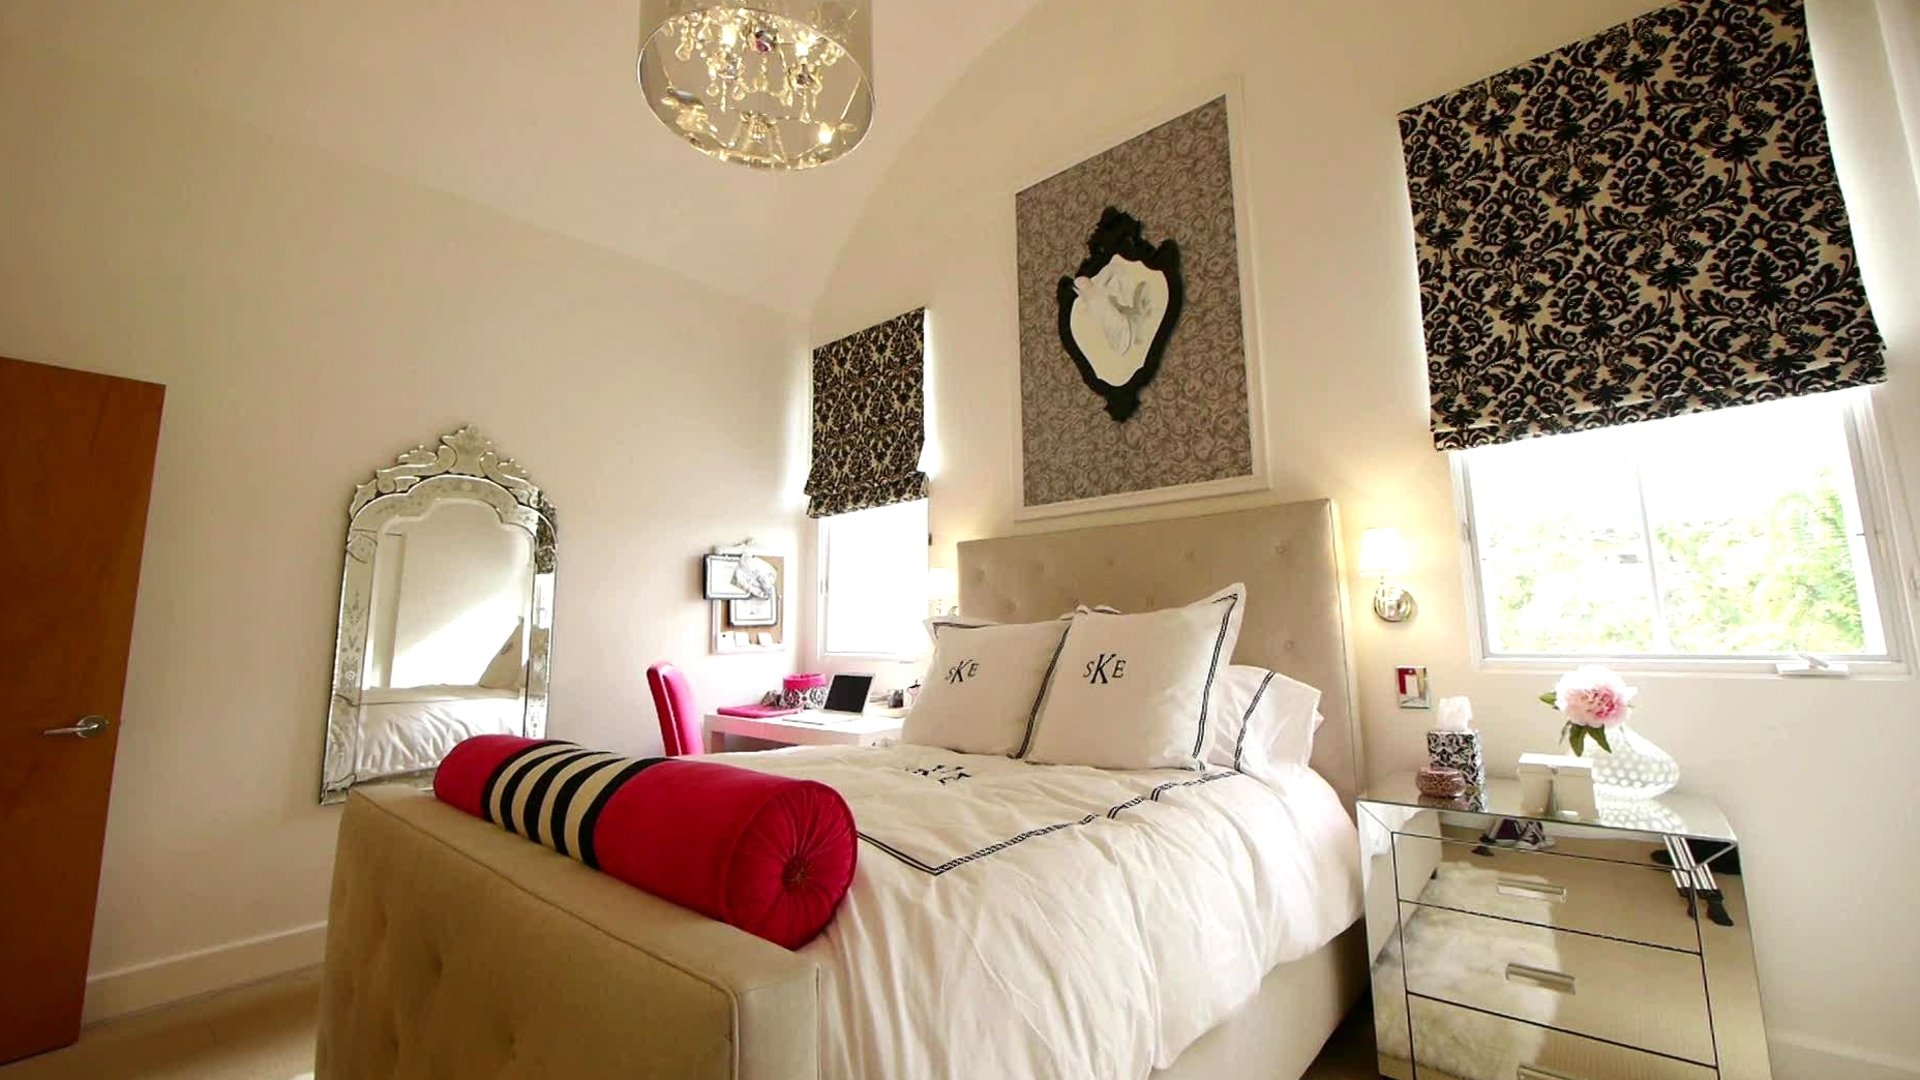 10 Ideal Sophisticated Teenage Girl Bedroom Ideas teen bedrooms ideas for decorating teen rooms hgtv 9 2022